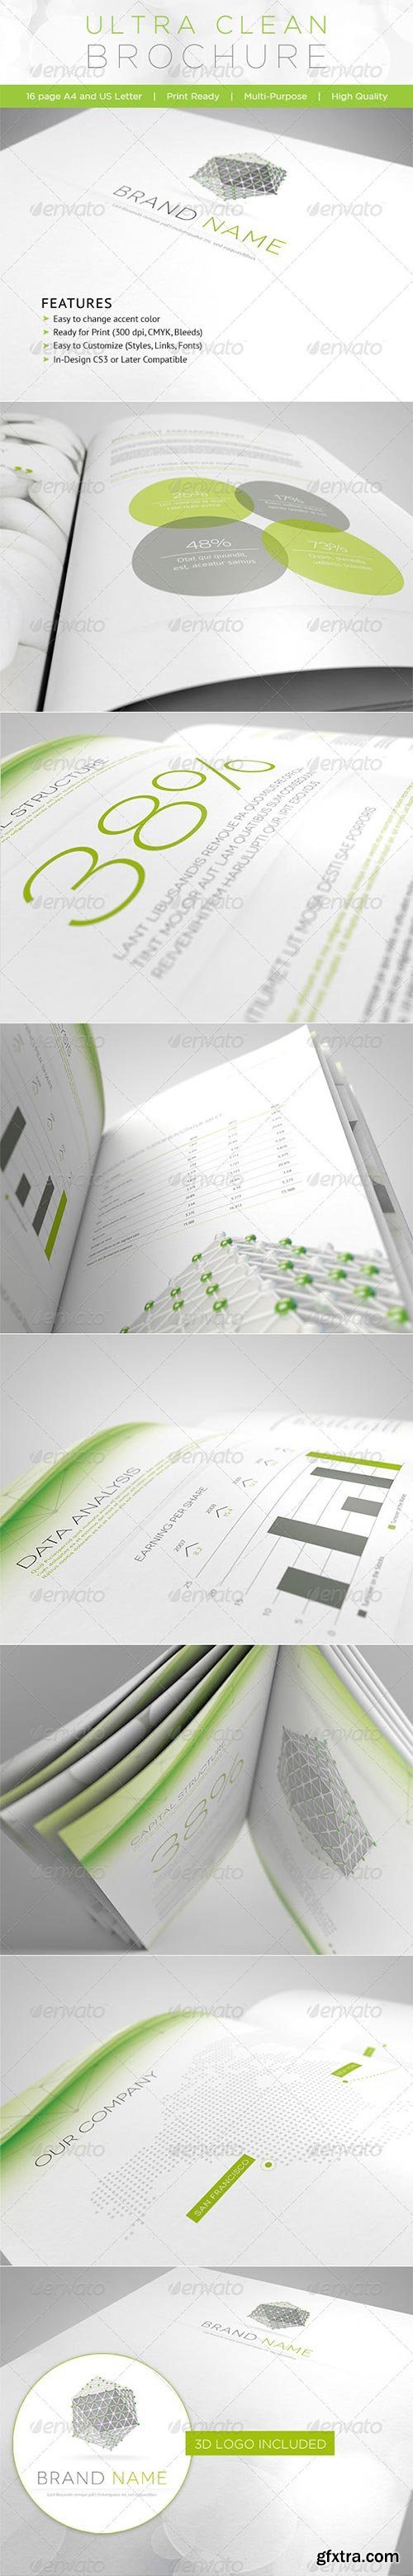 GraphicRiver - Ultra Clean Brochure 1708031